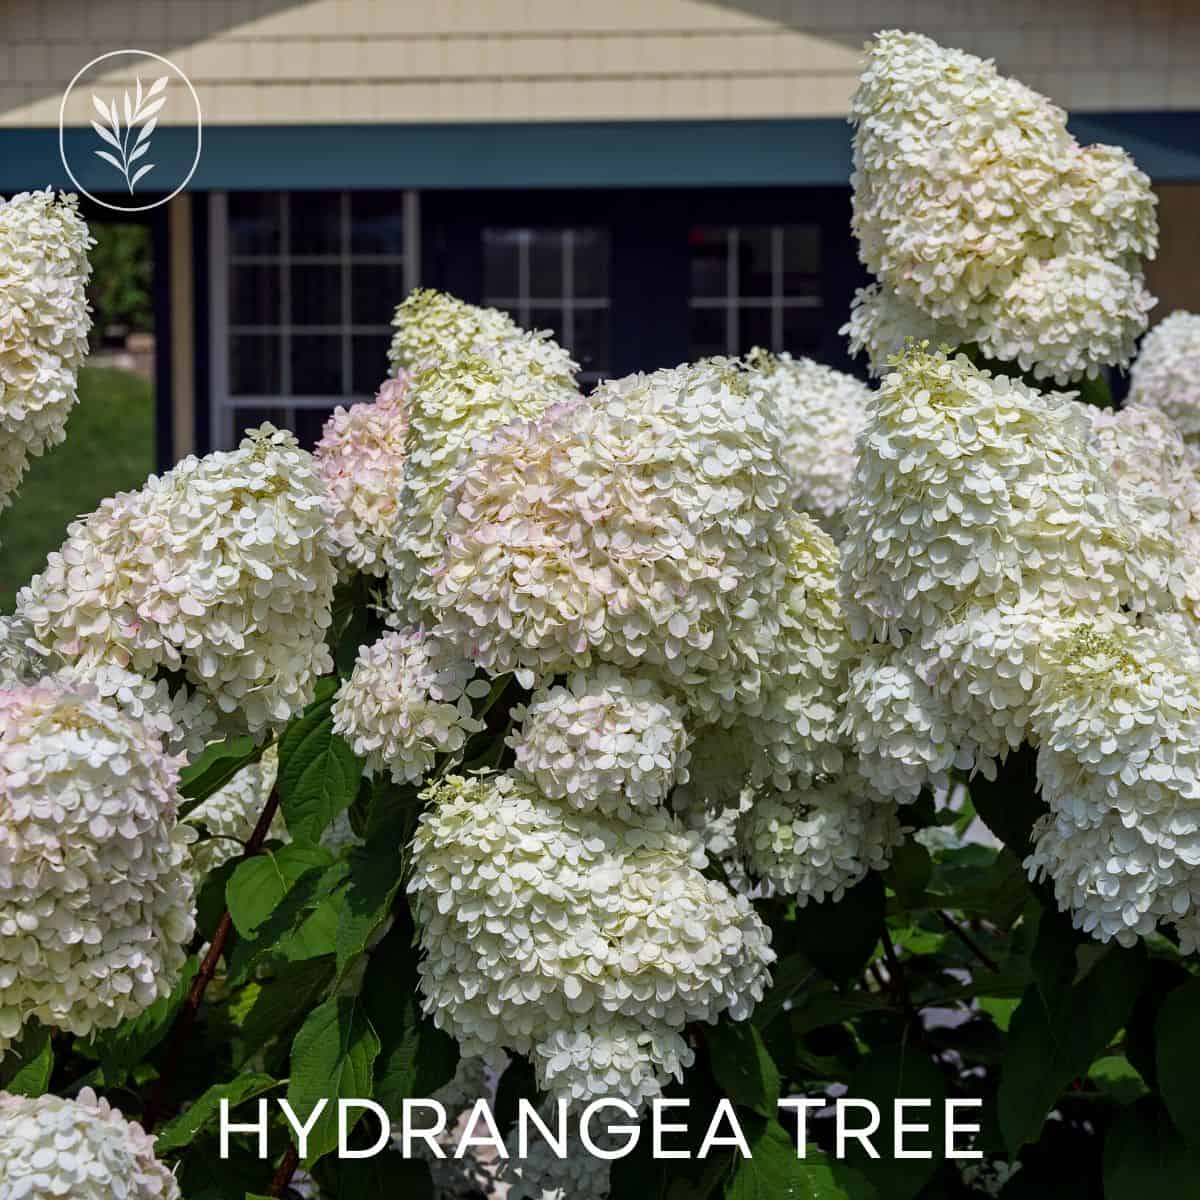 Hydrangea tree via @home4theharvest